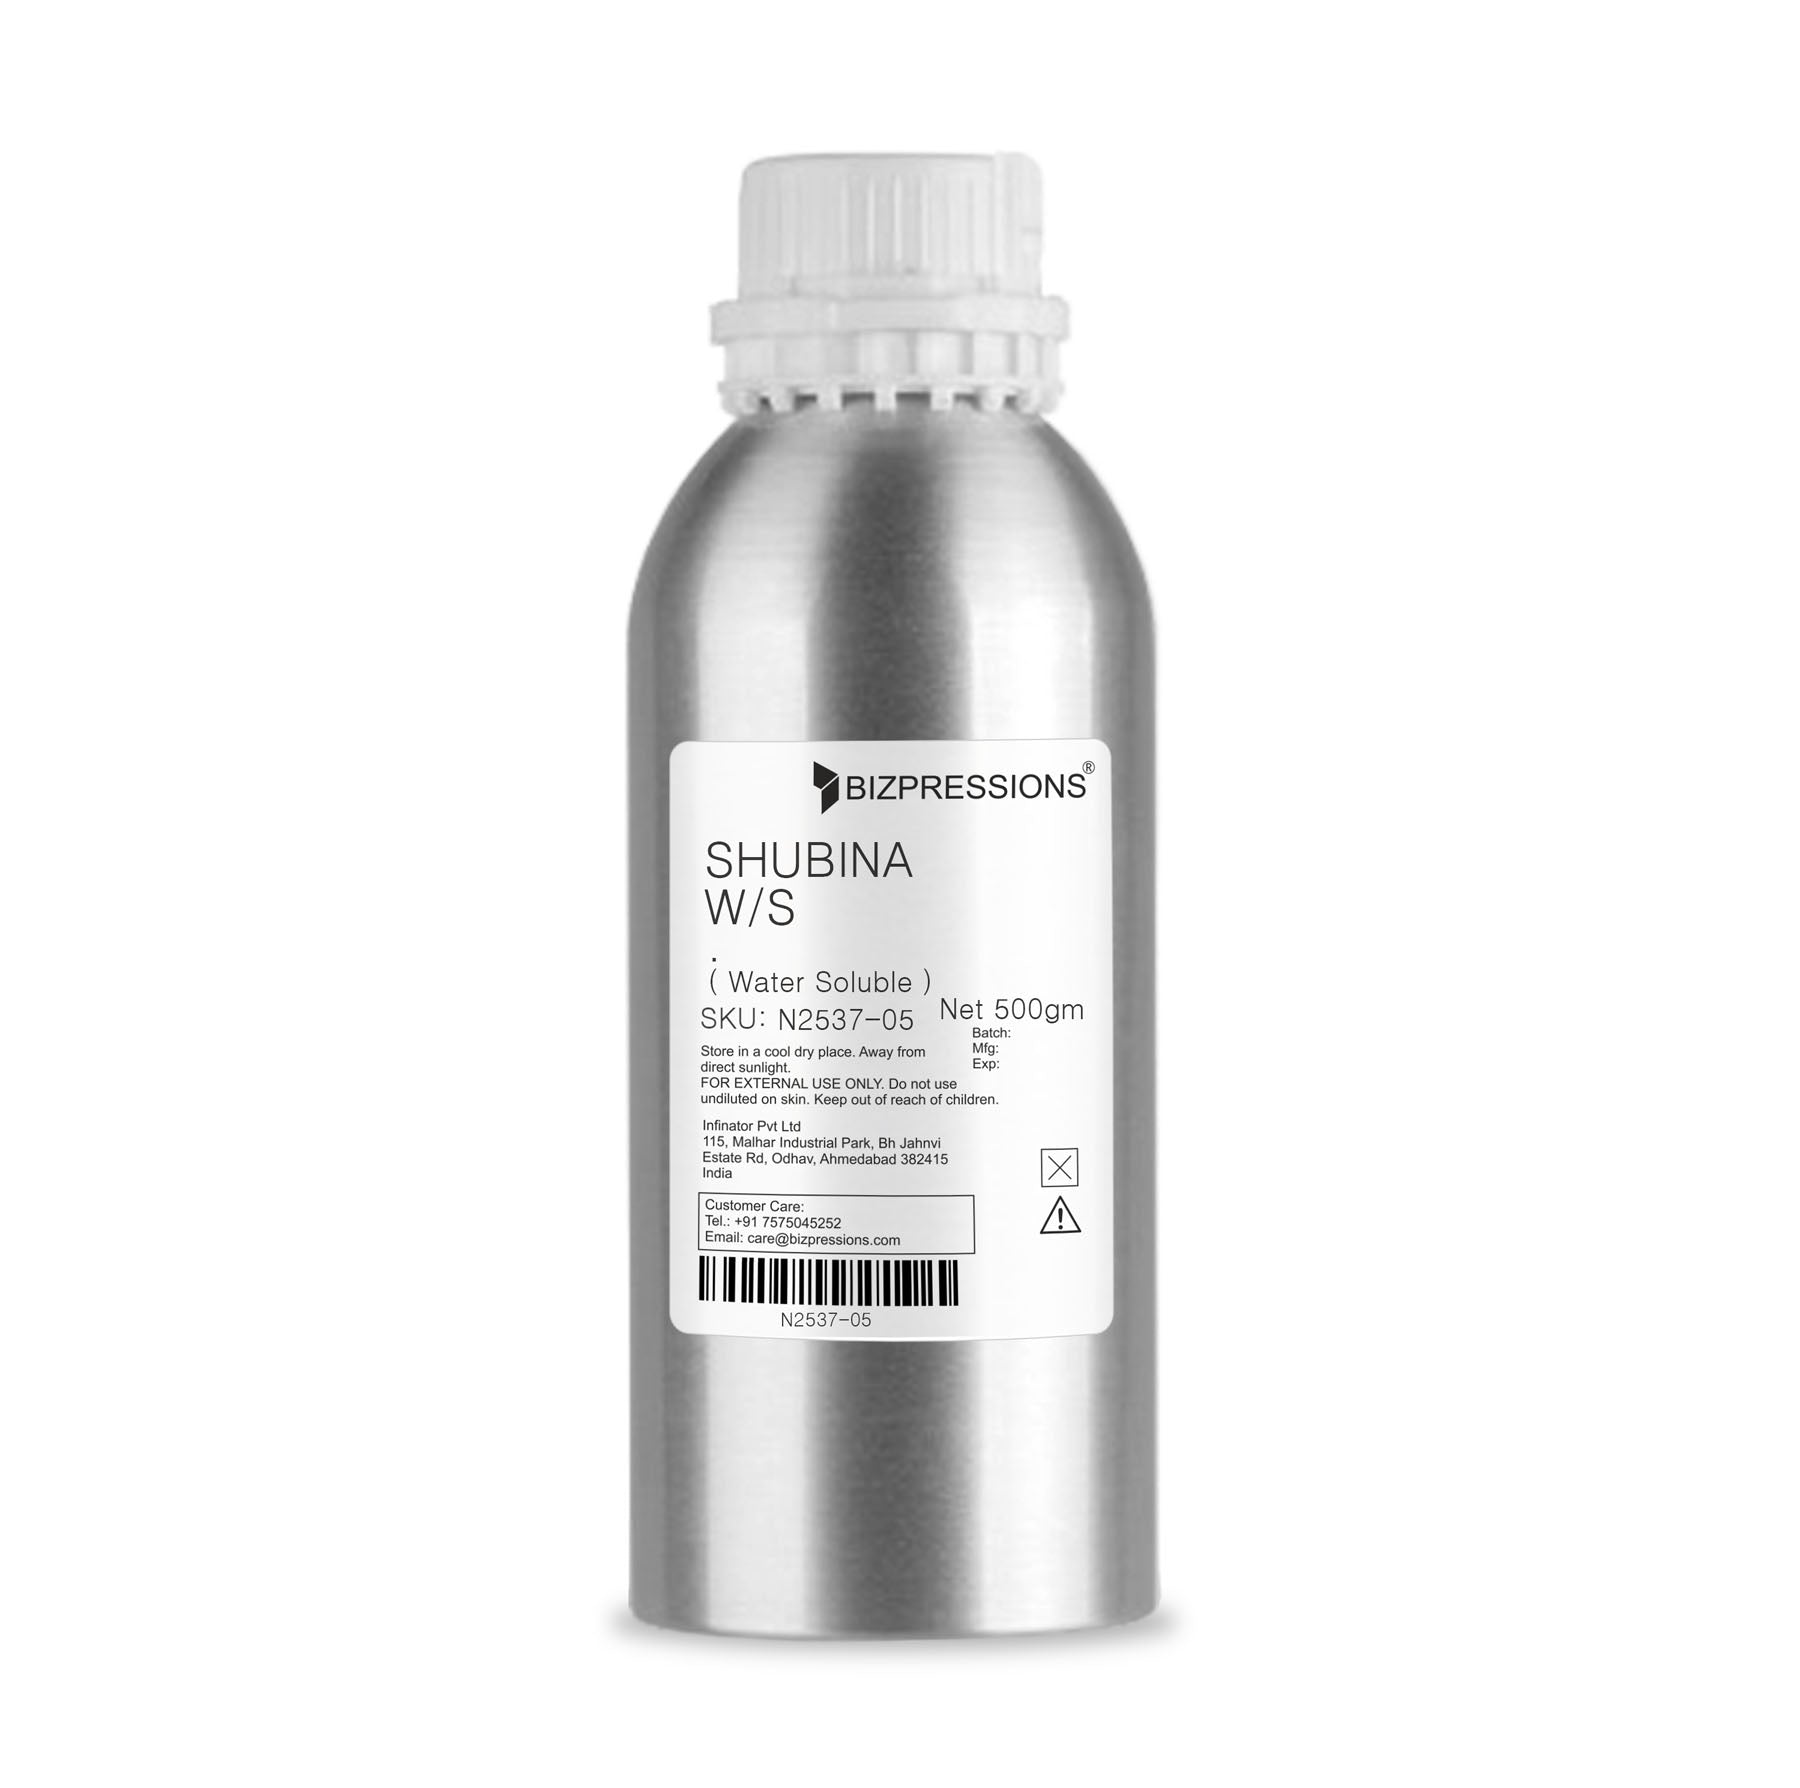 SHUBINA W/S - Fragrance ( Water Soluble ) - 500 gm